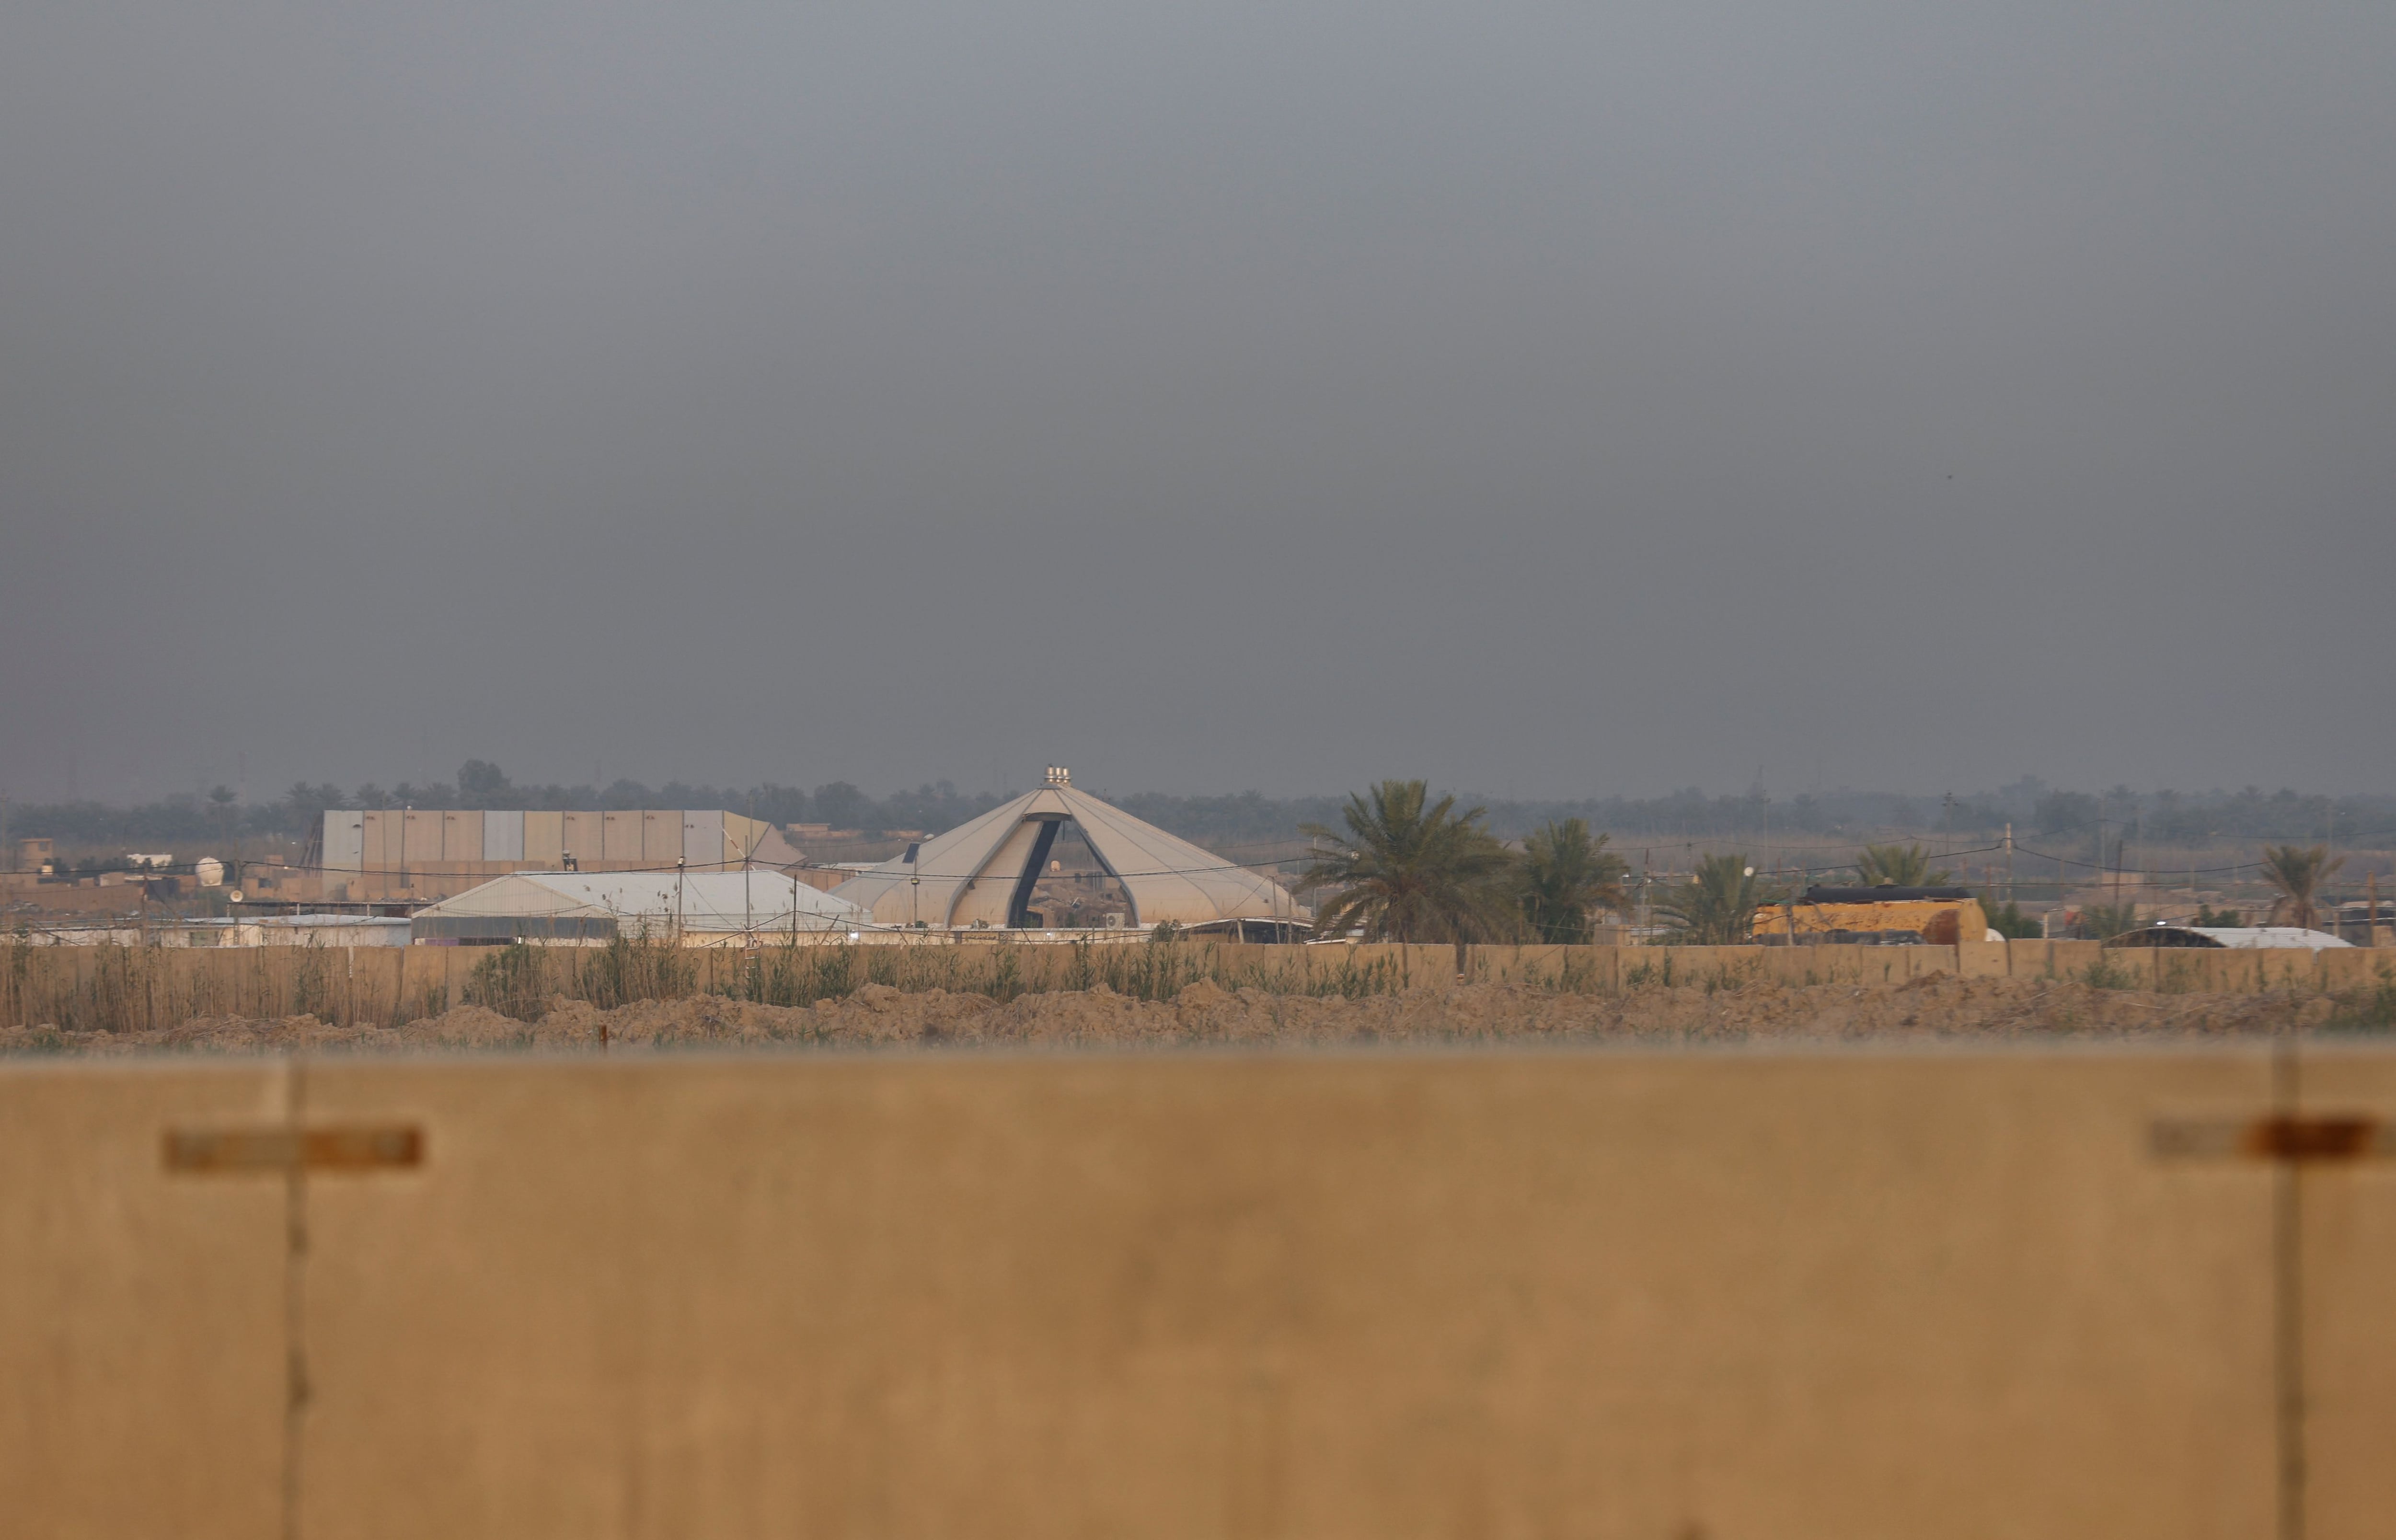 La base militar de Kalsu en Irak (REUTERS/Alaa al-Marjani)